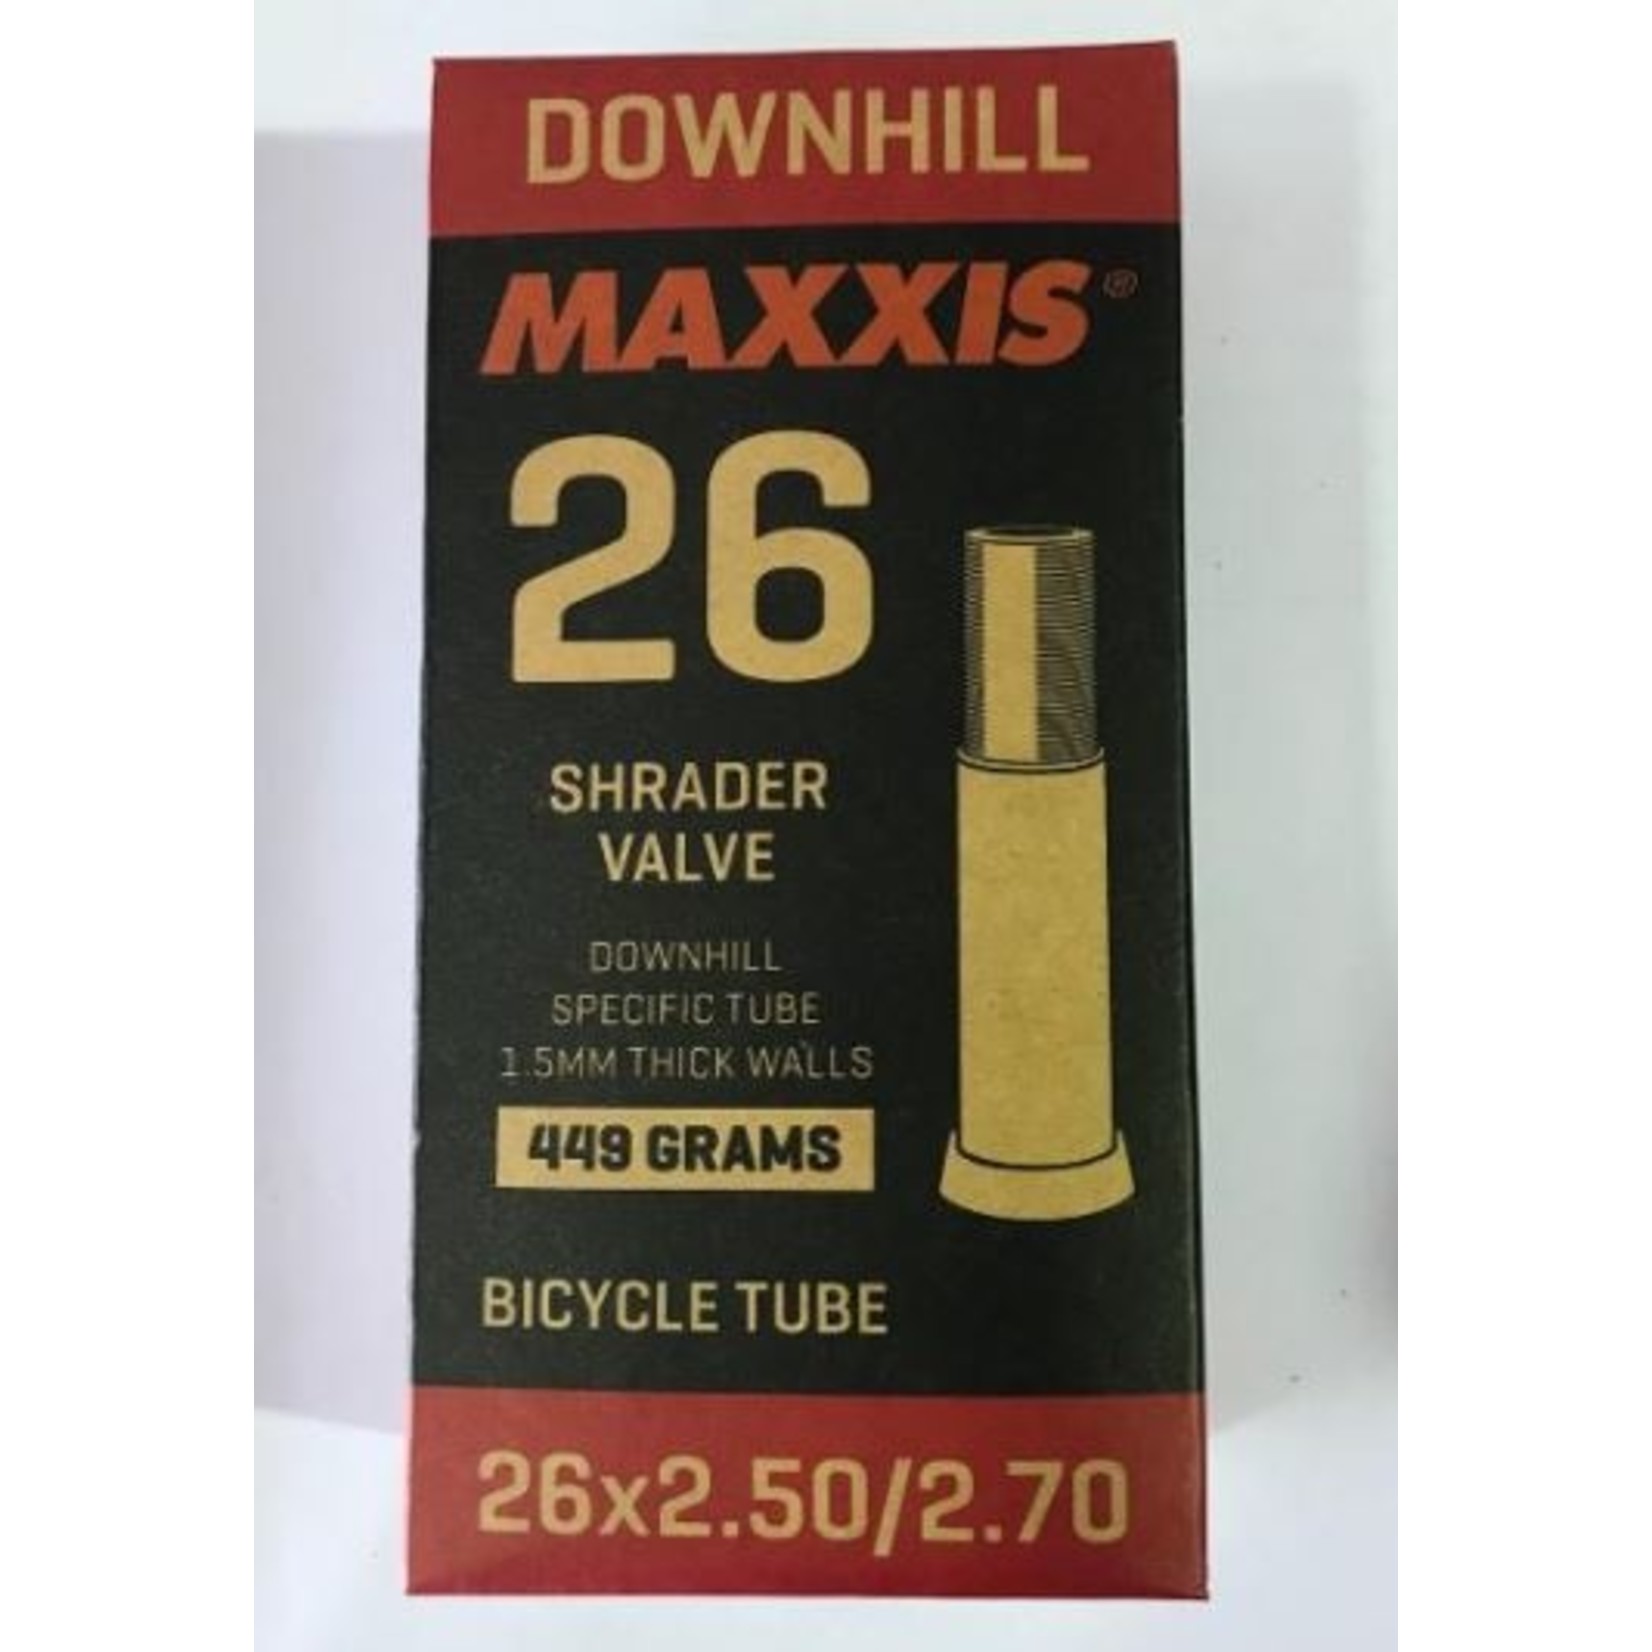 Maxxis Maxxis Bike Tube Downhill - 26 X 2.5/2.70 - Schrader Valve - Black - Pair